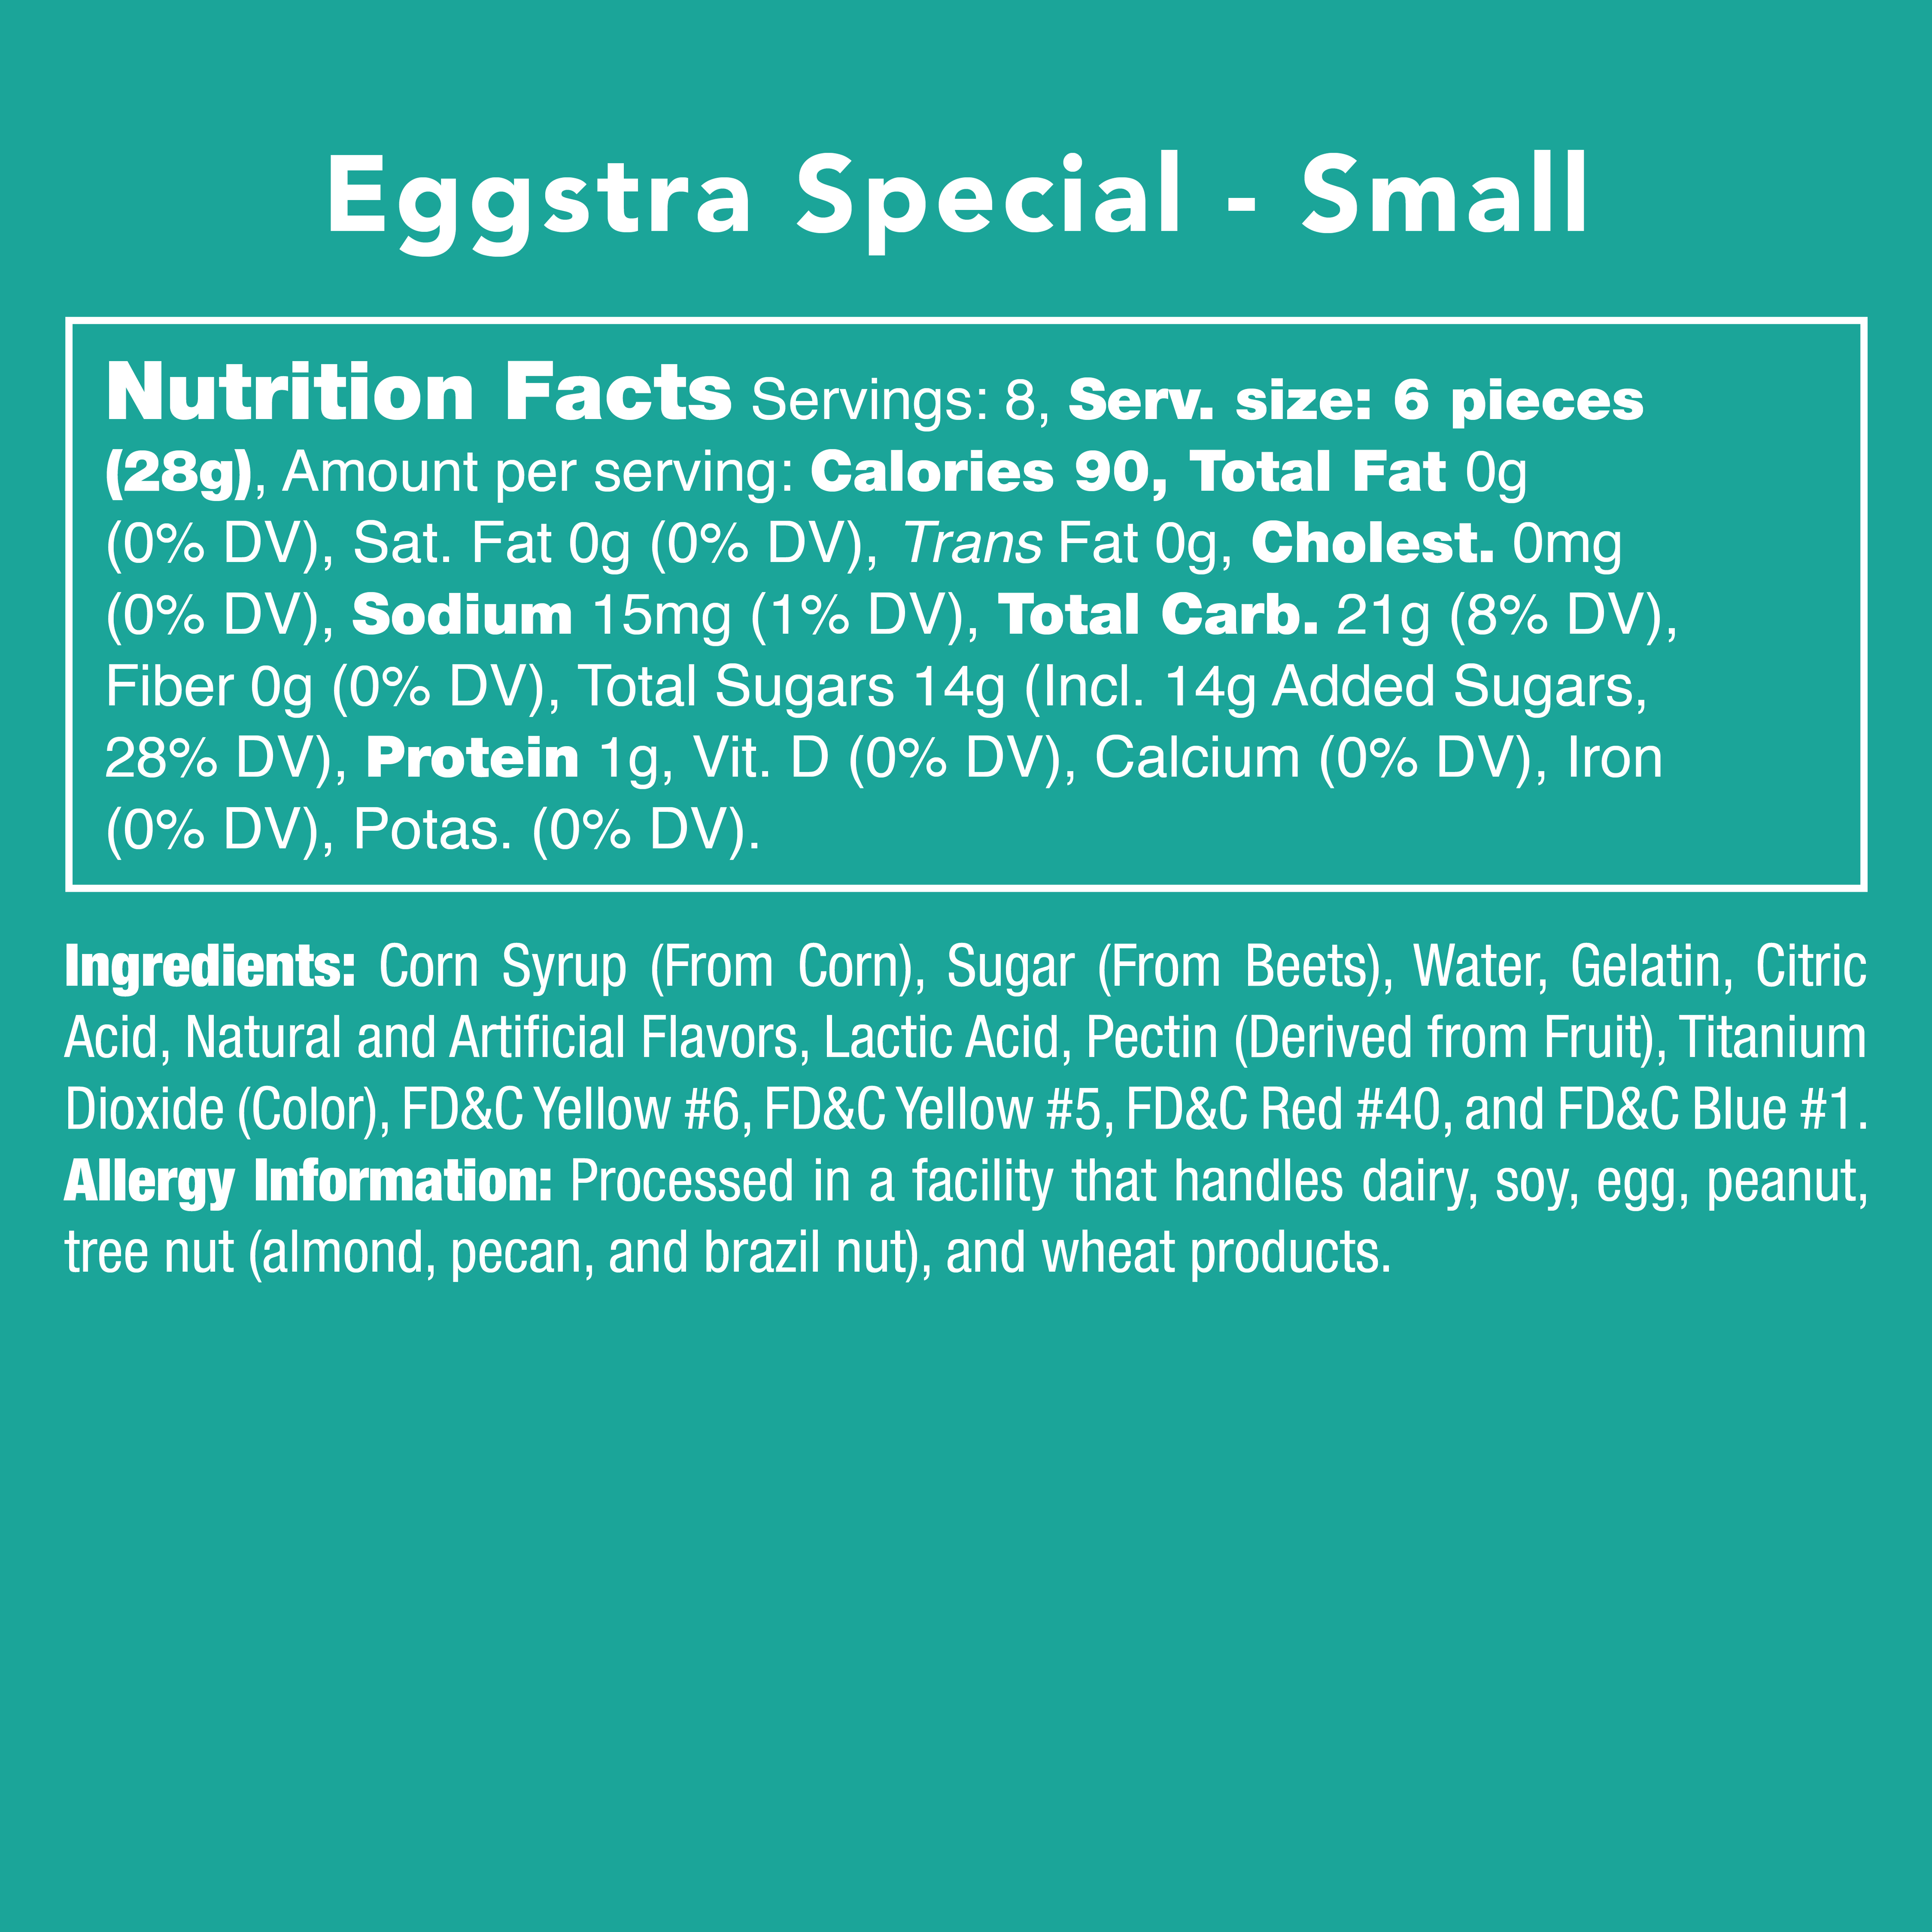 Eggstra Special Gummy Fruity Eggs - Clearance